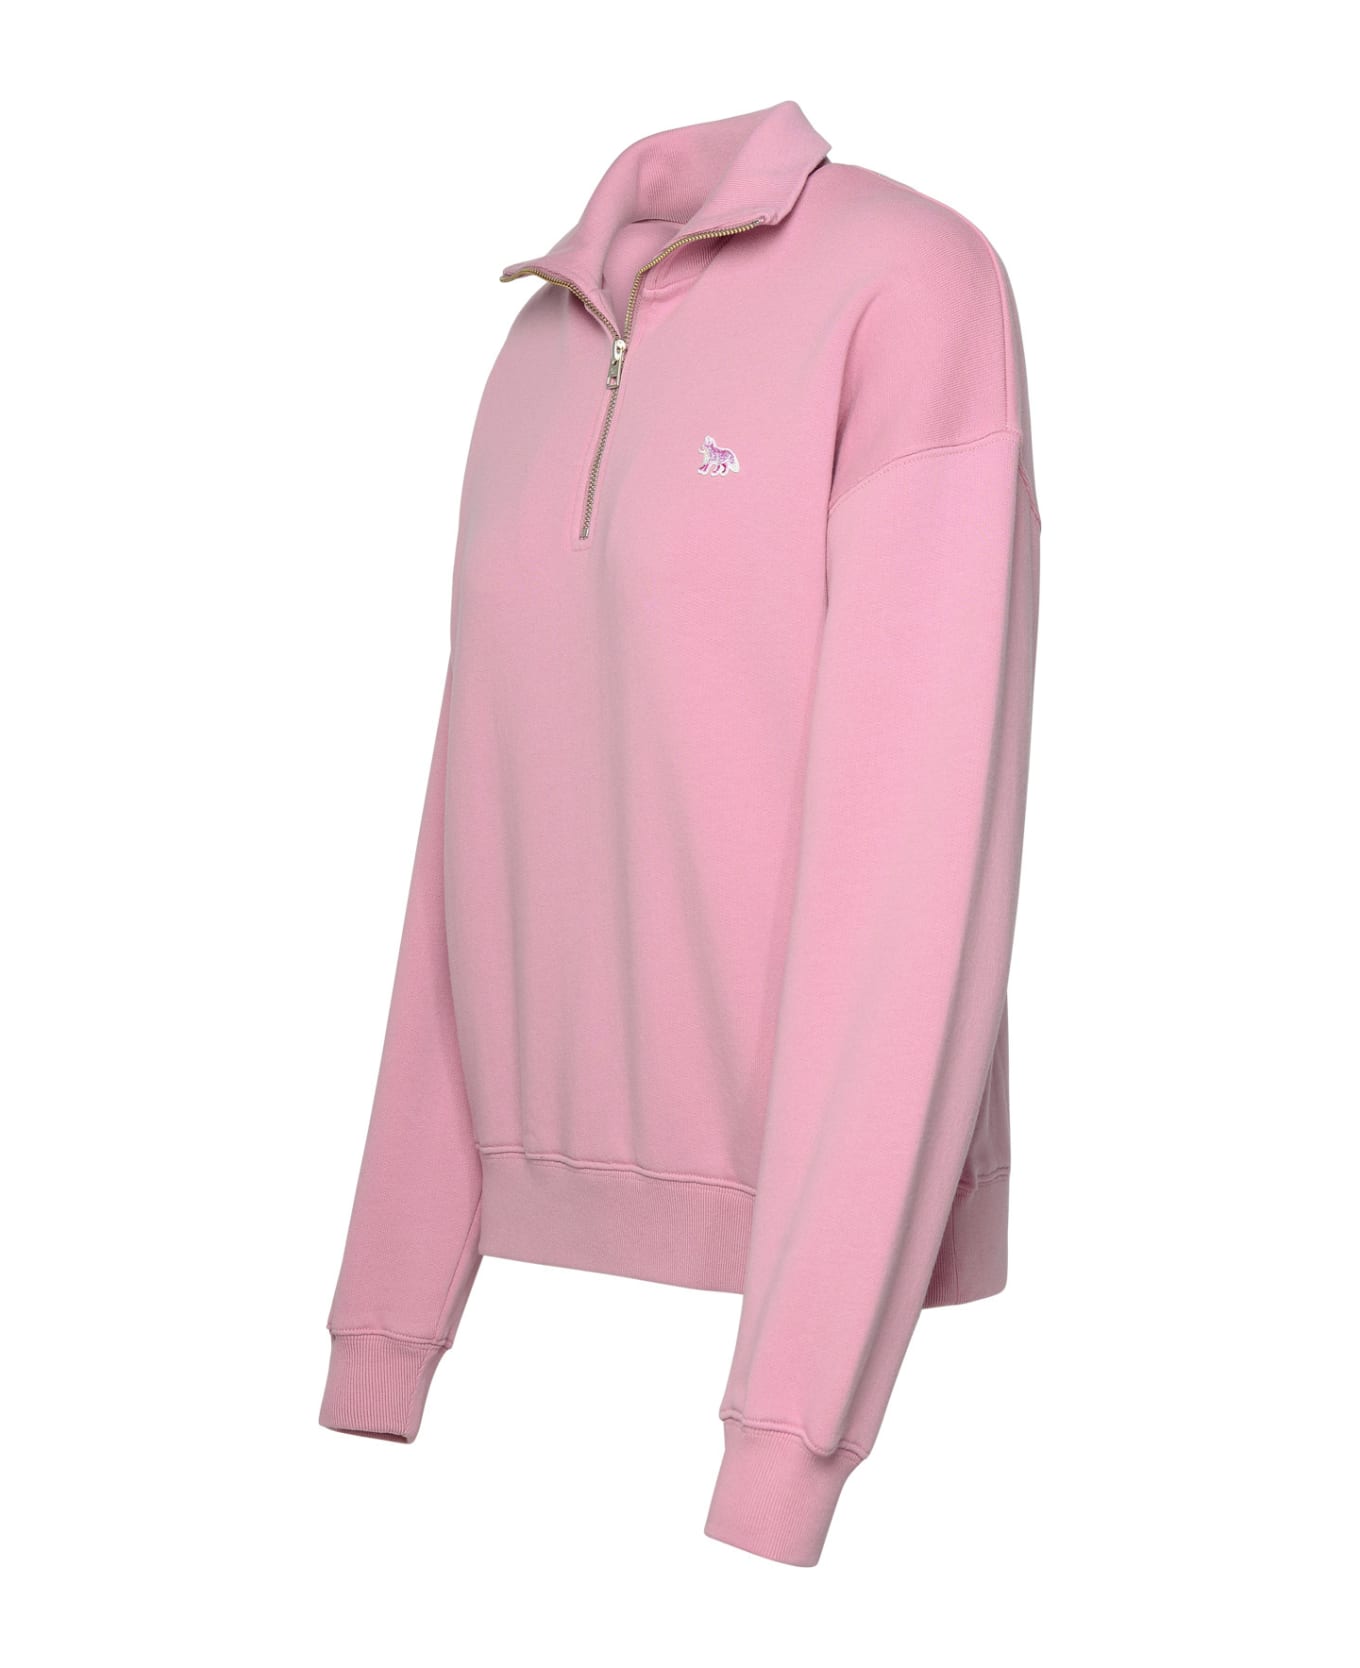 Maison Kitsuné Pink Cotton Sweatshirt - Pink フリース